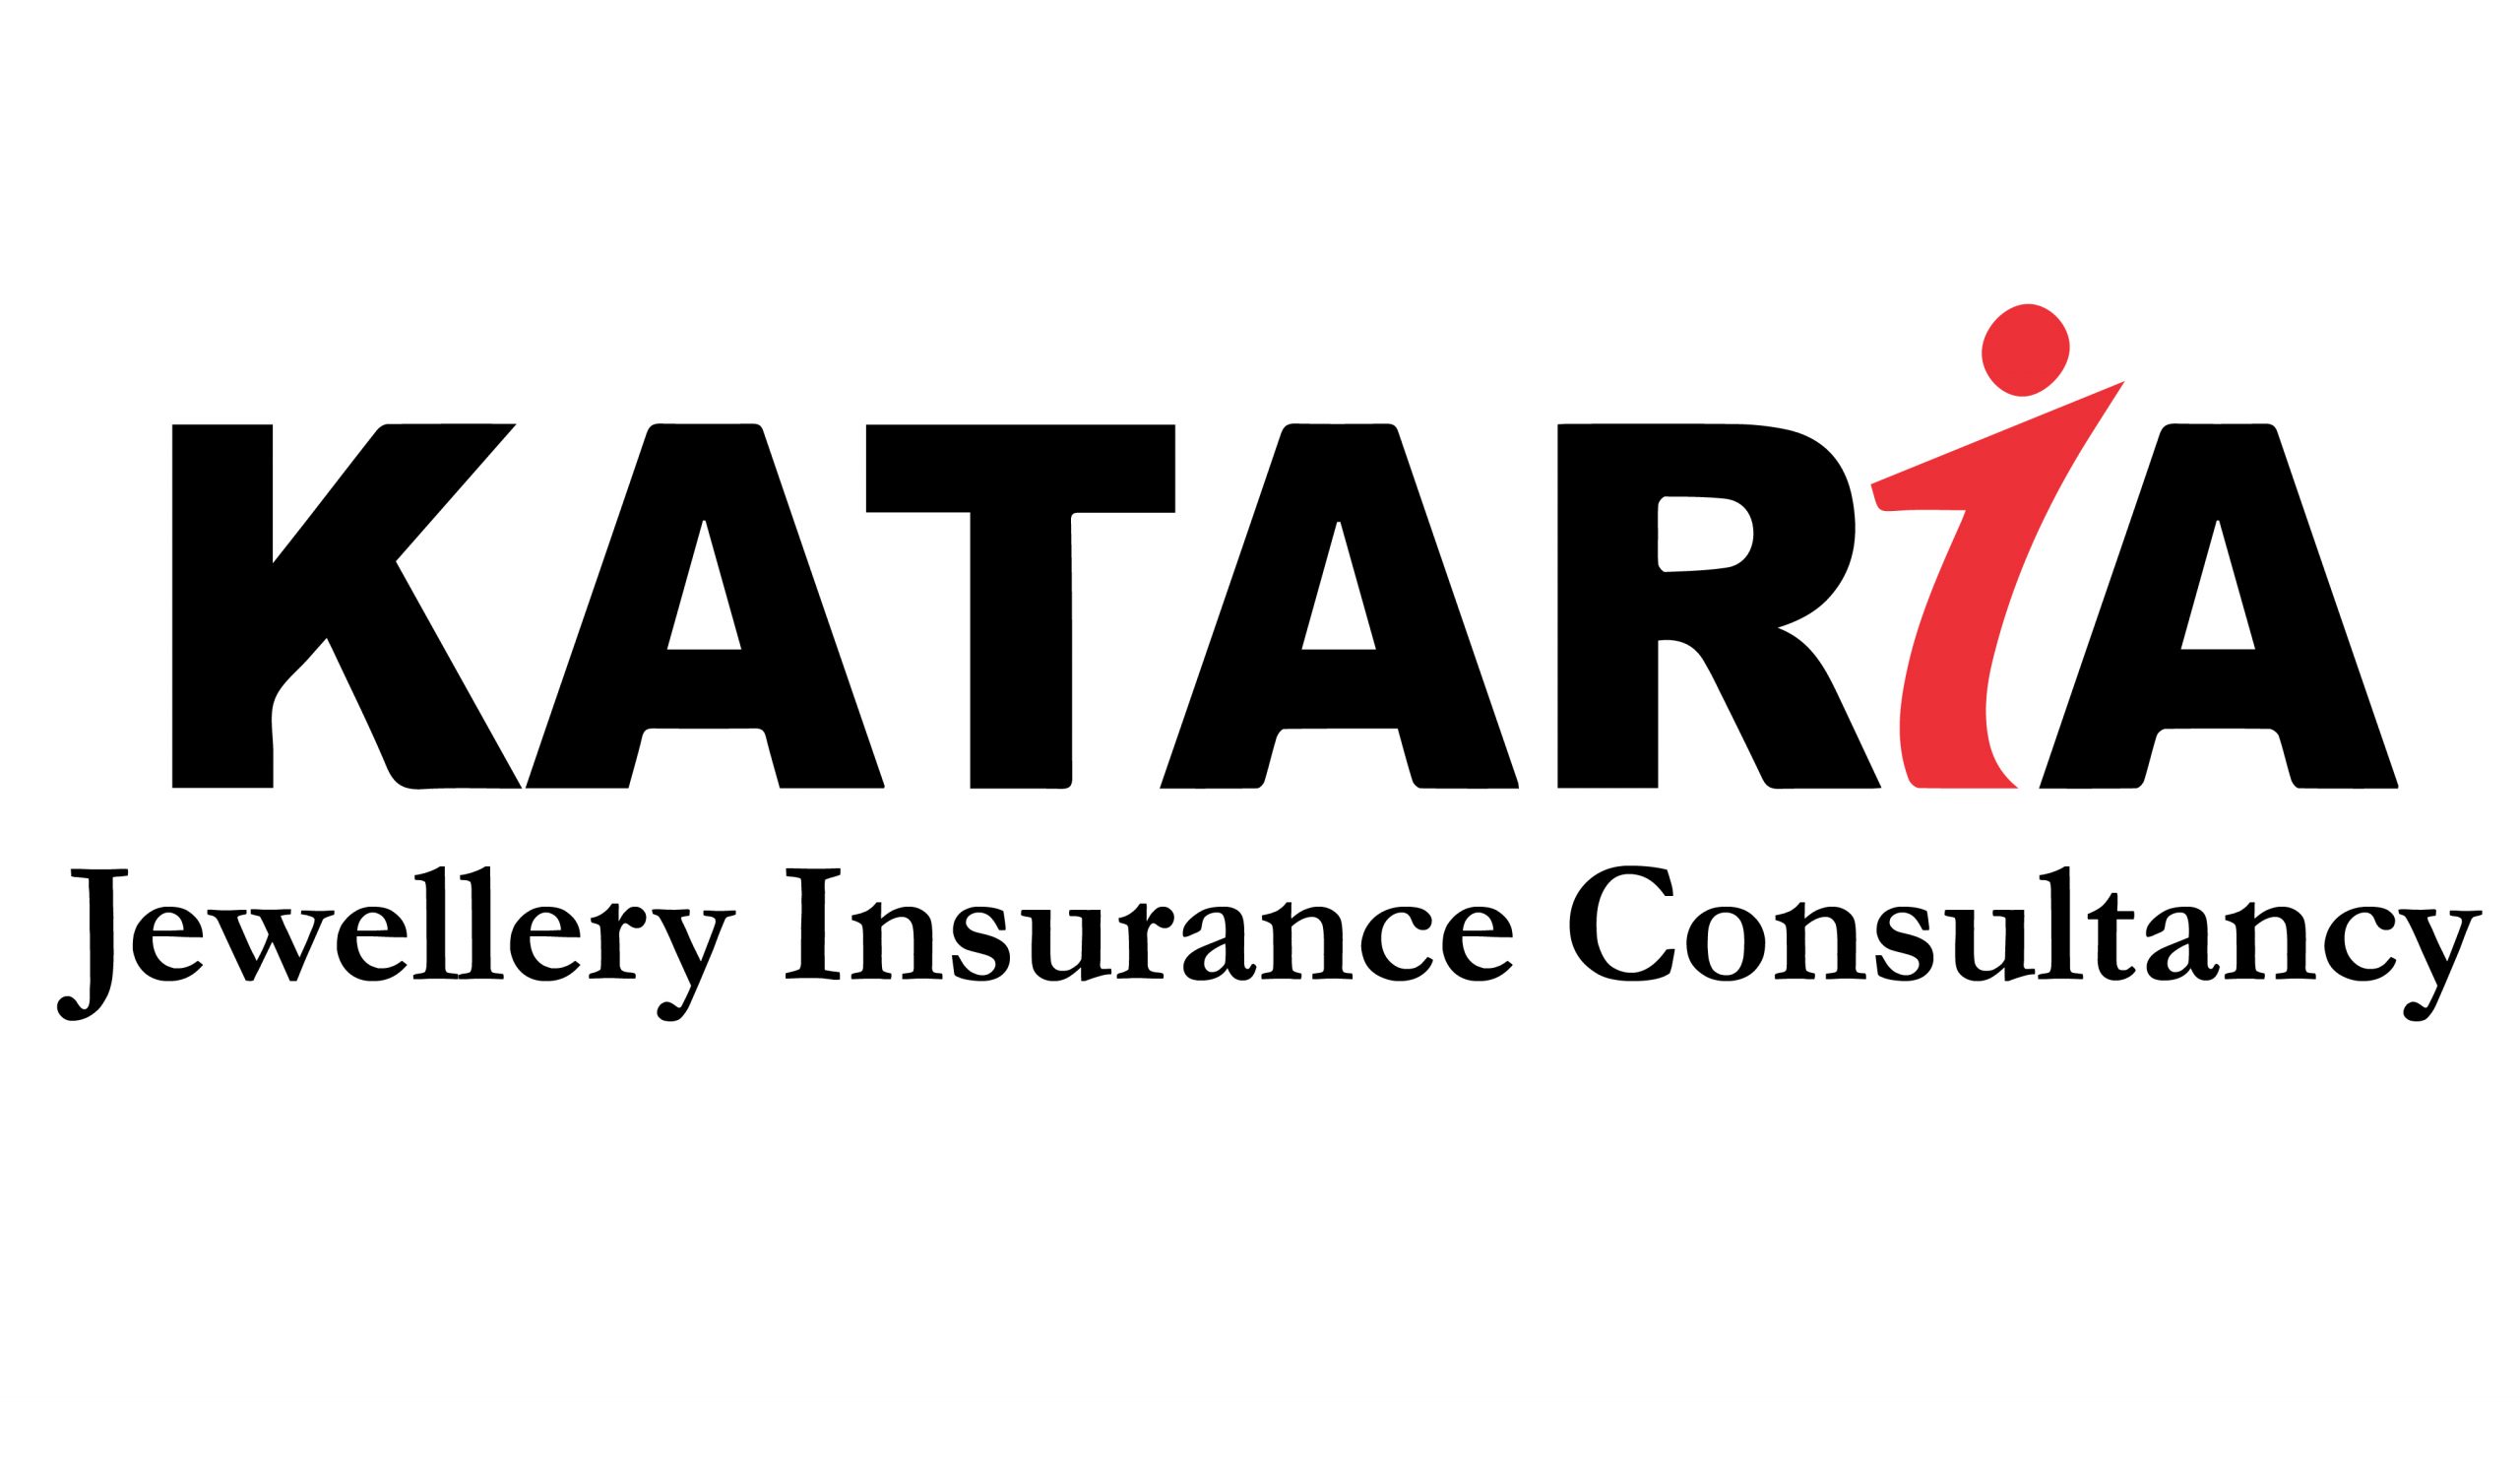 Kataria Insurance Consultancy